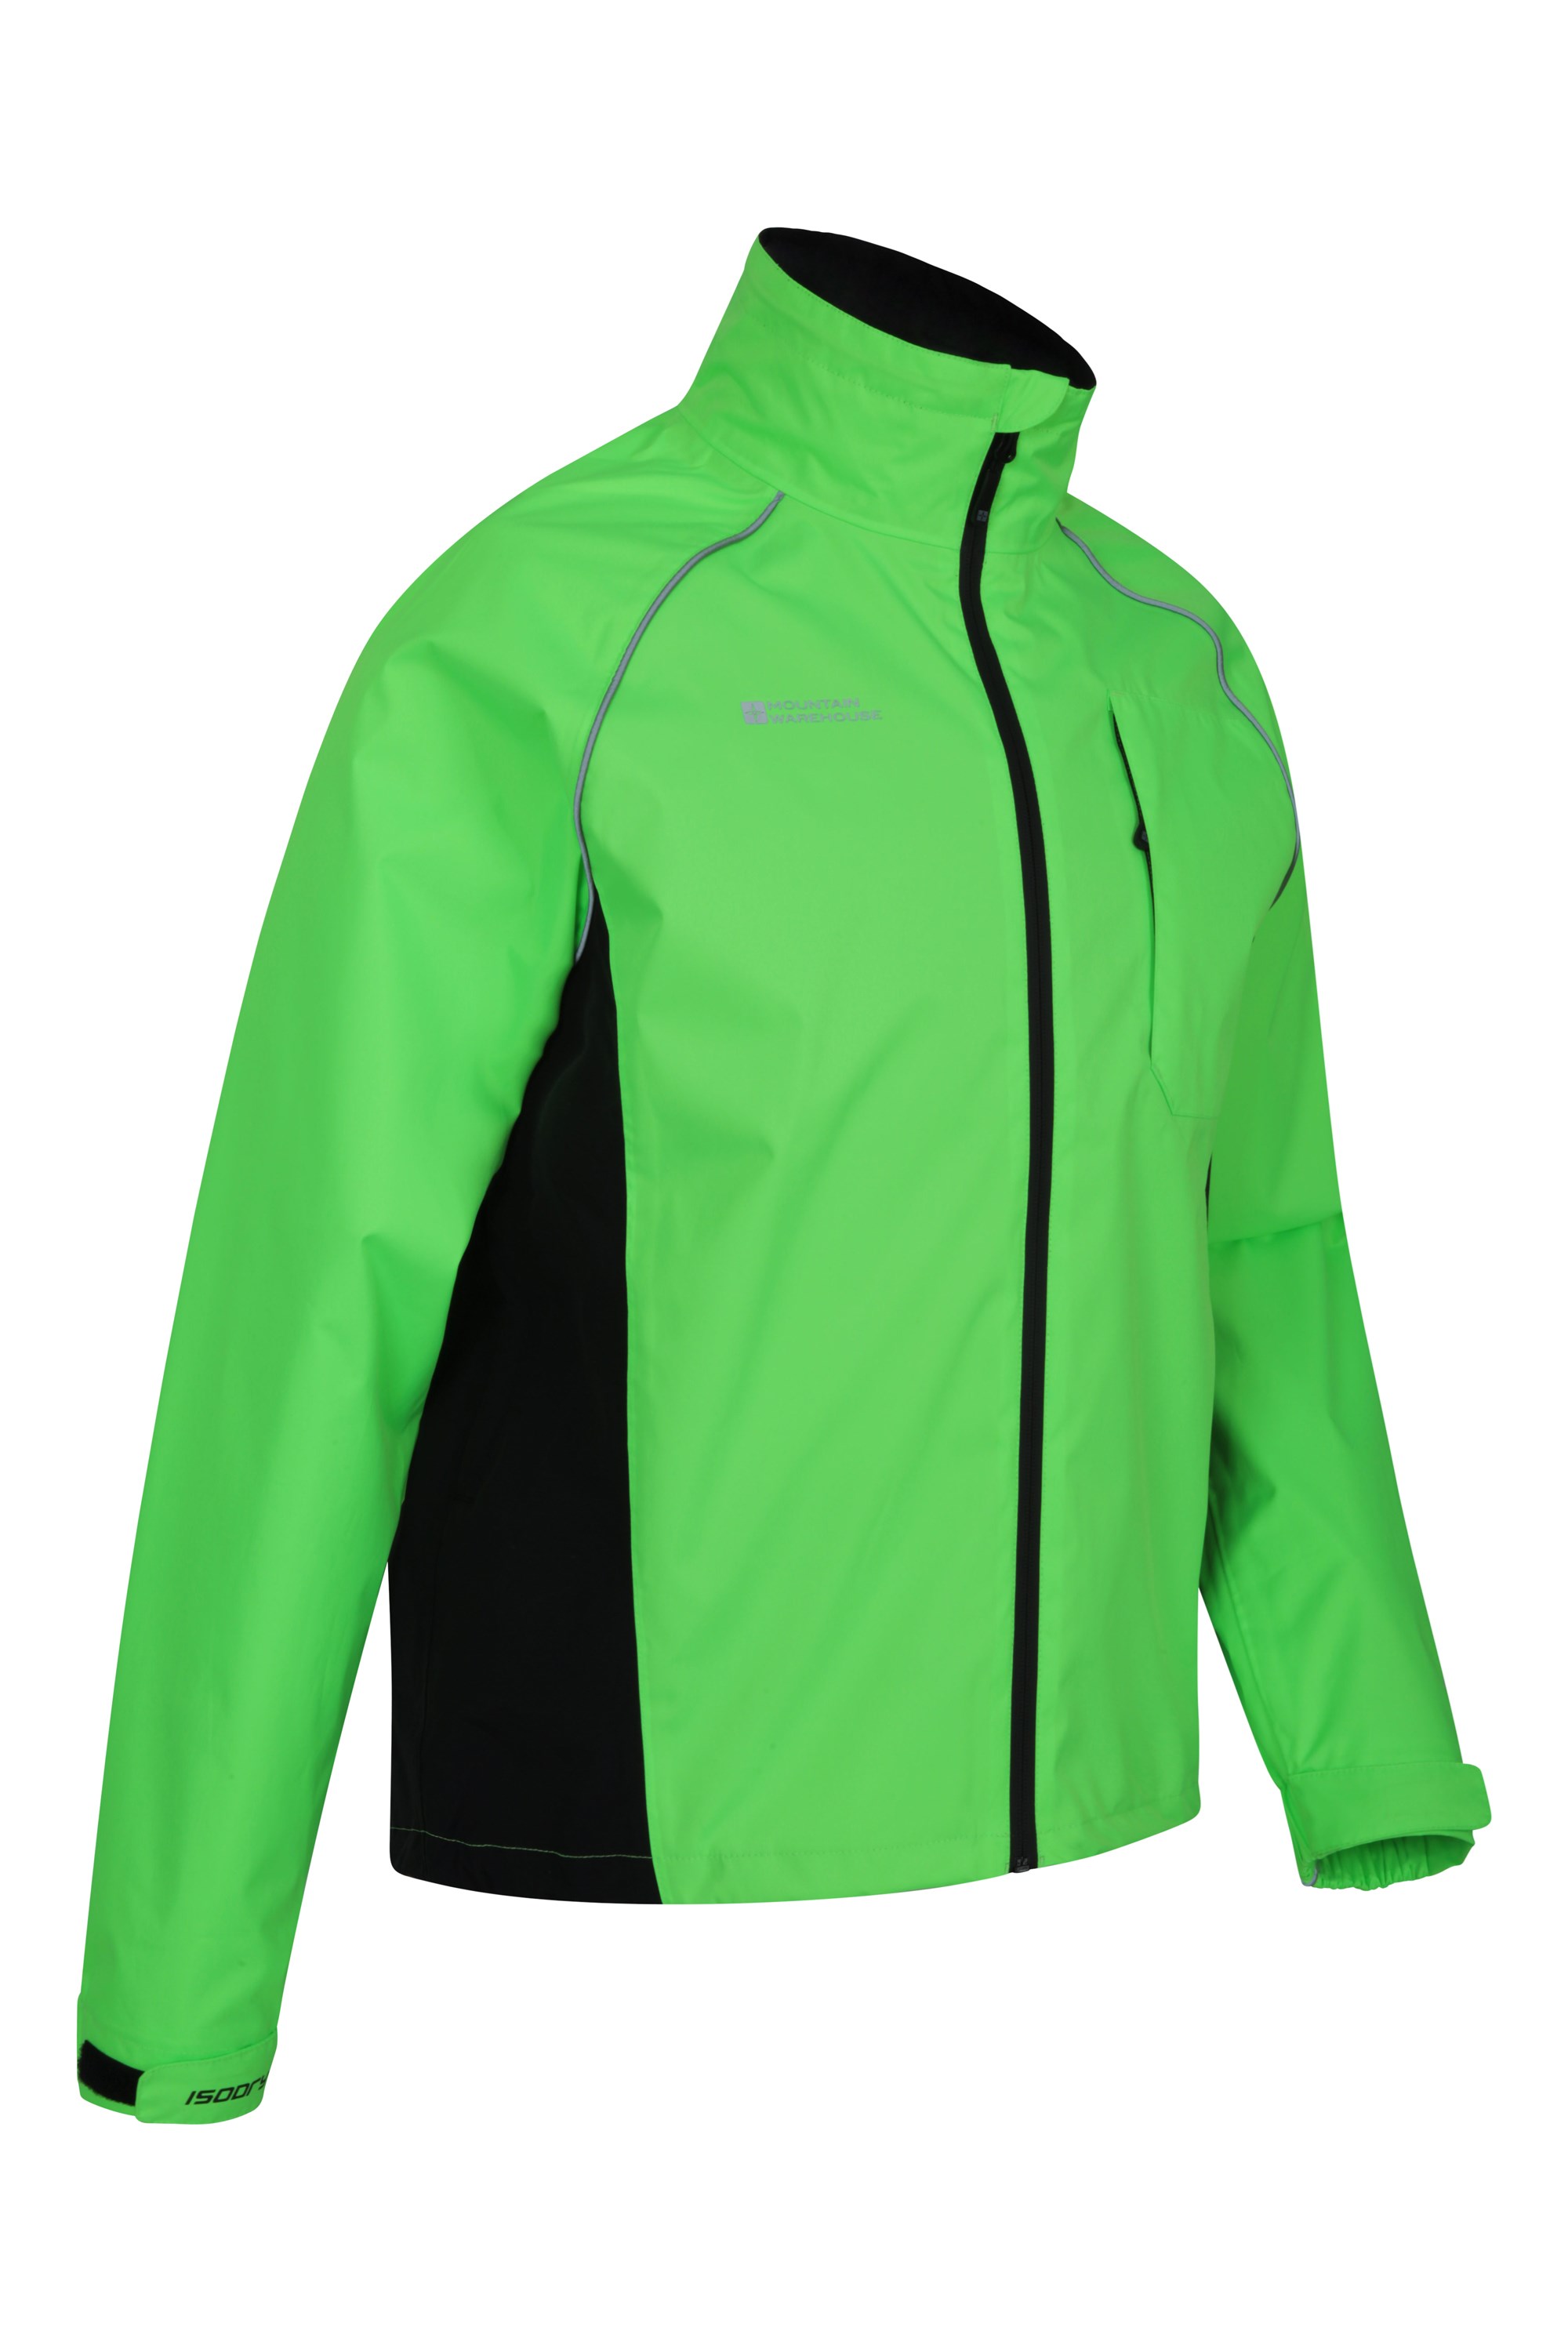 mountain warehouse cycling jacket